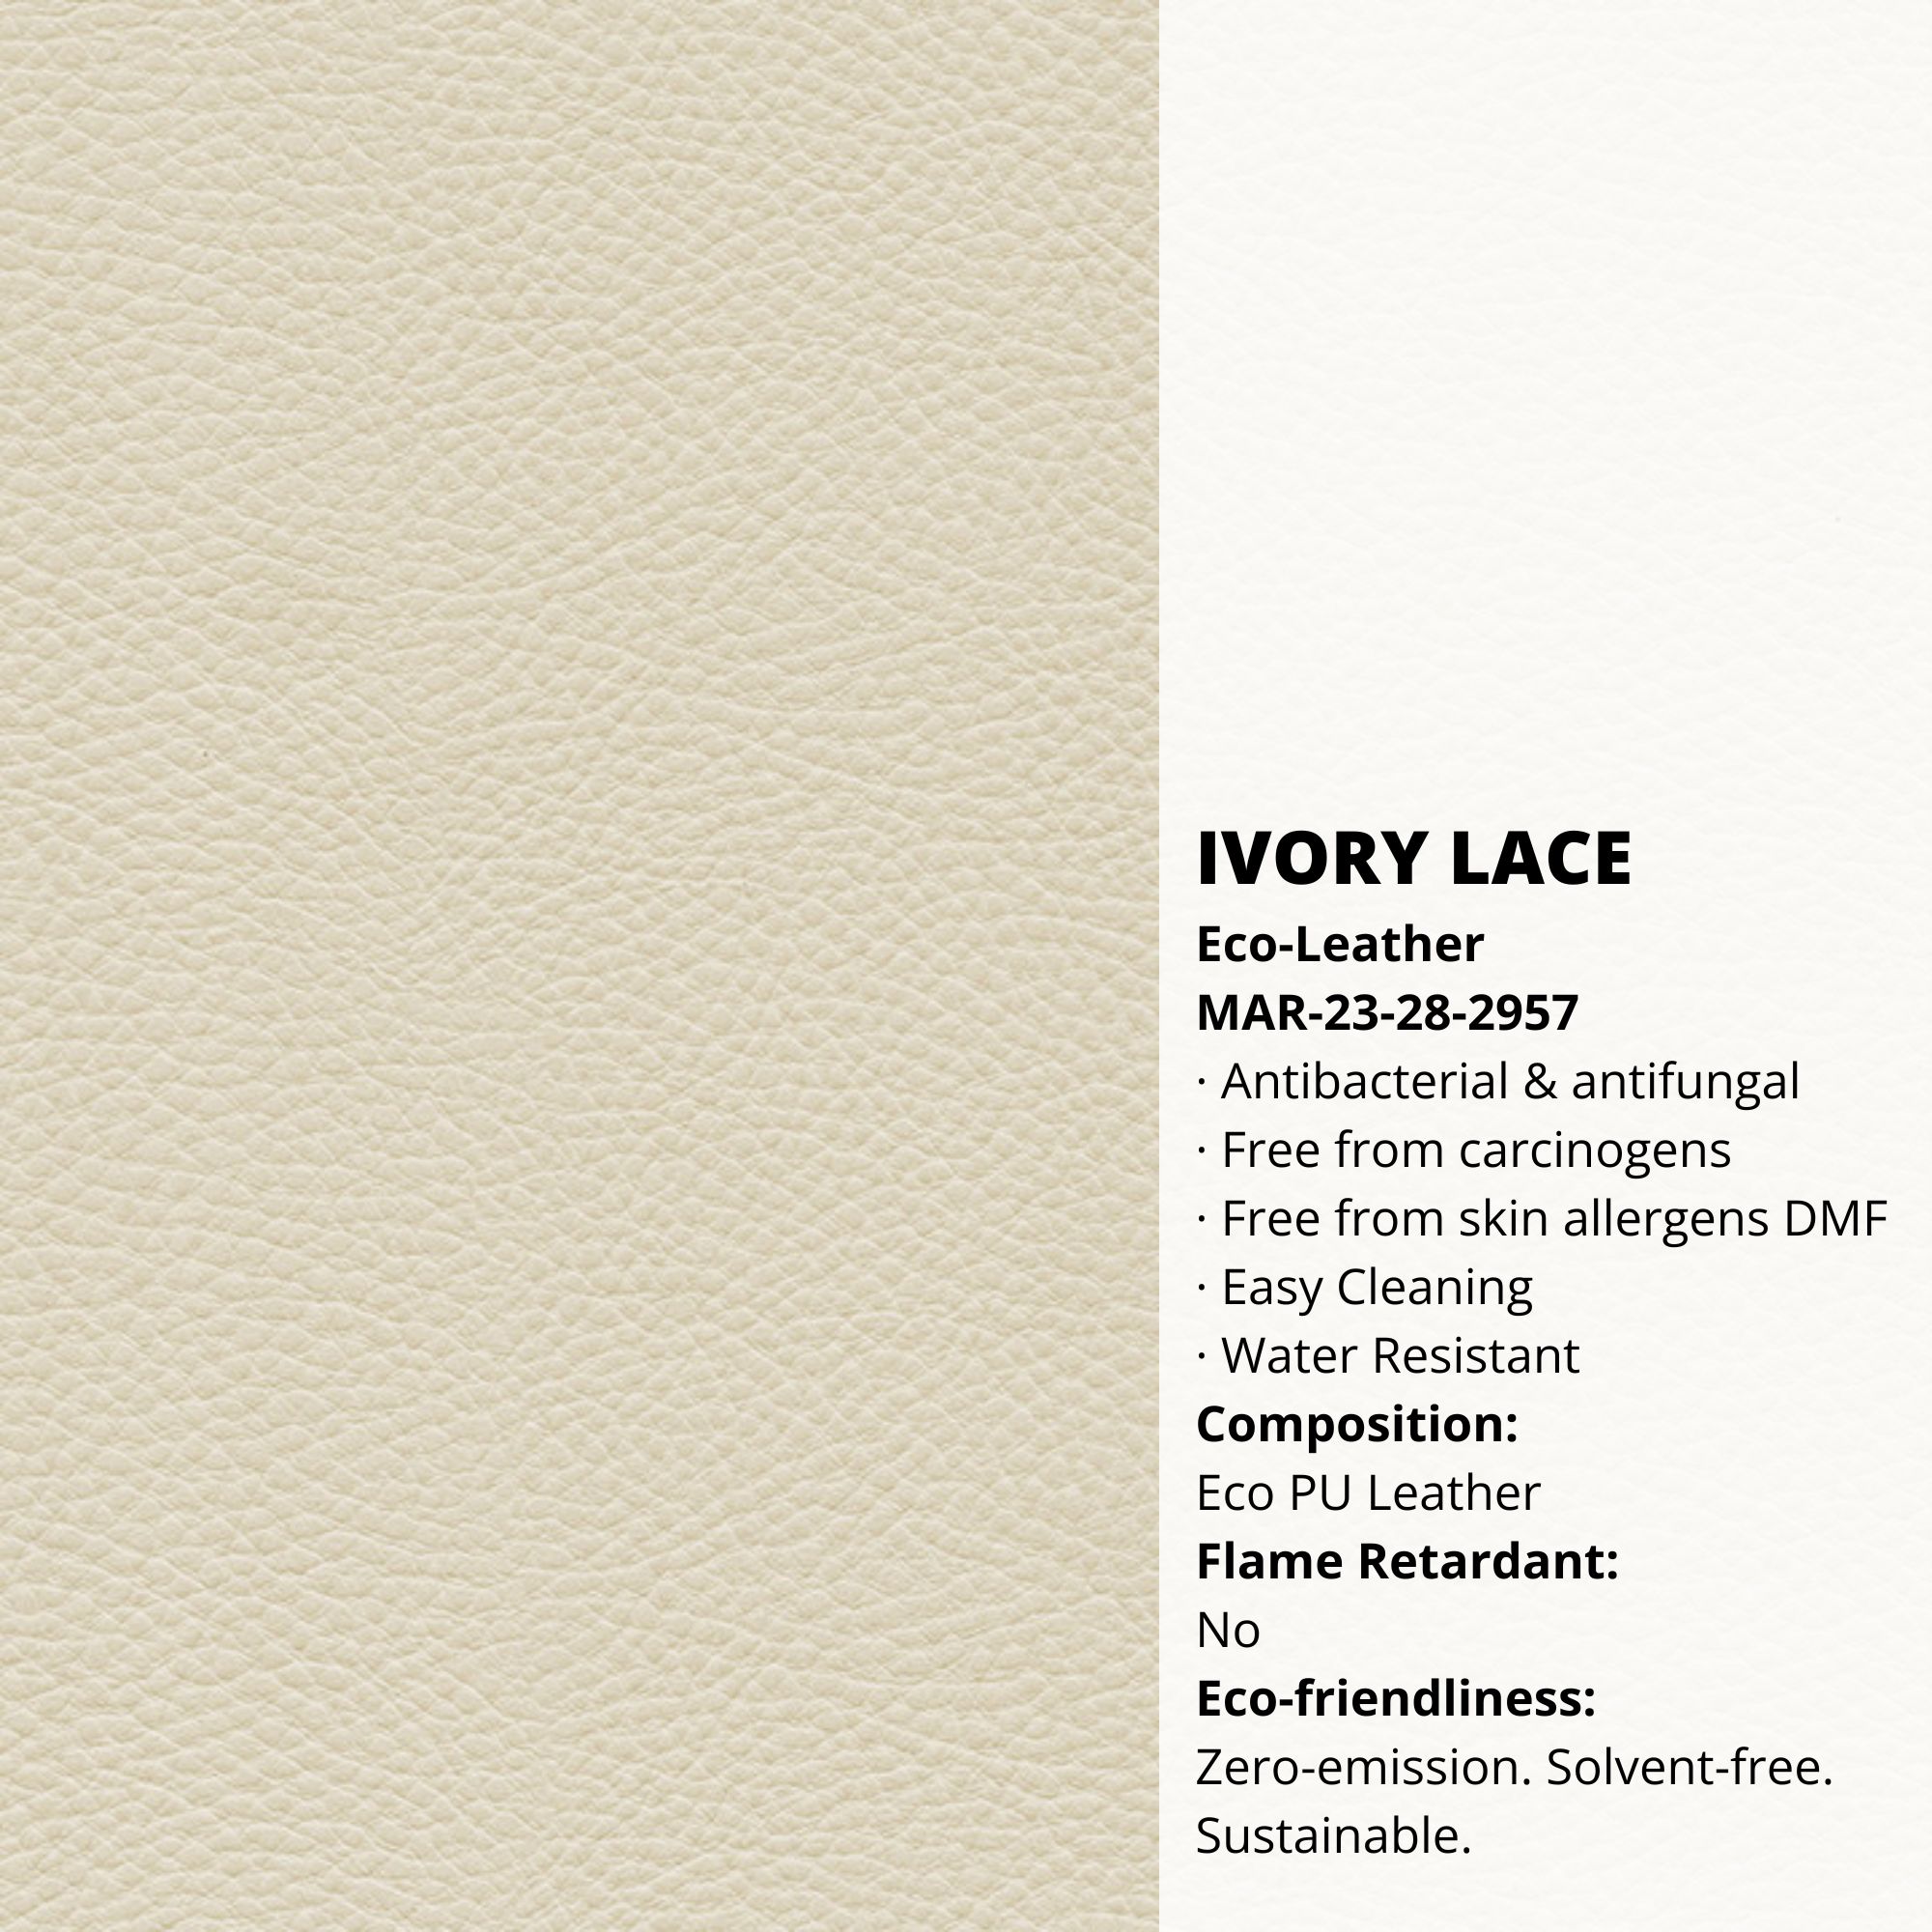 Ivory Lace